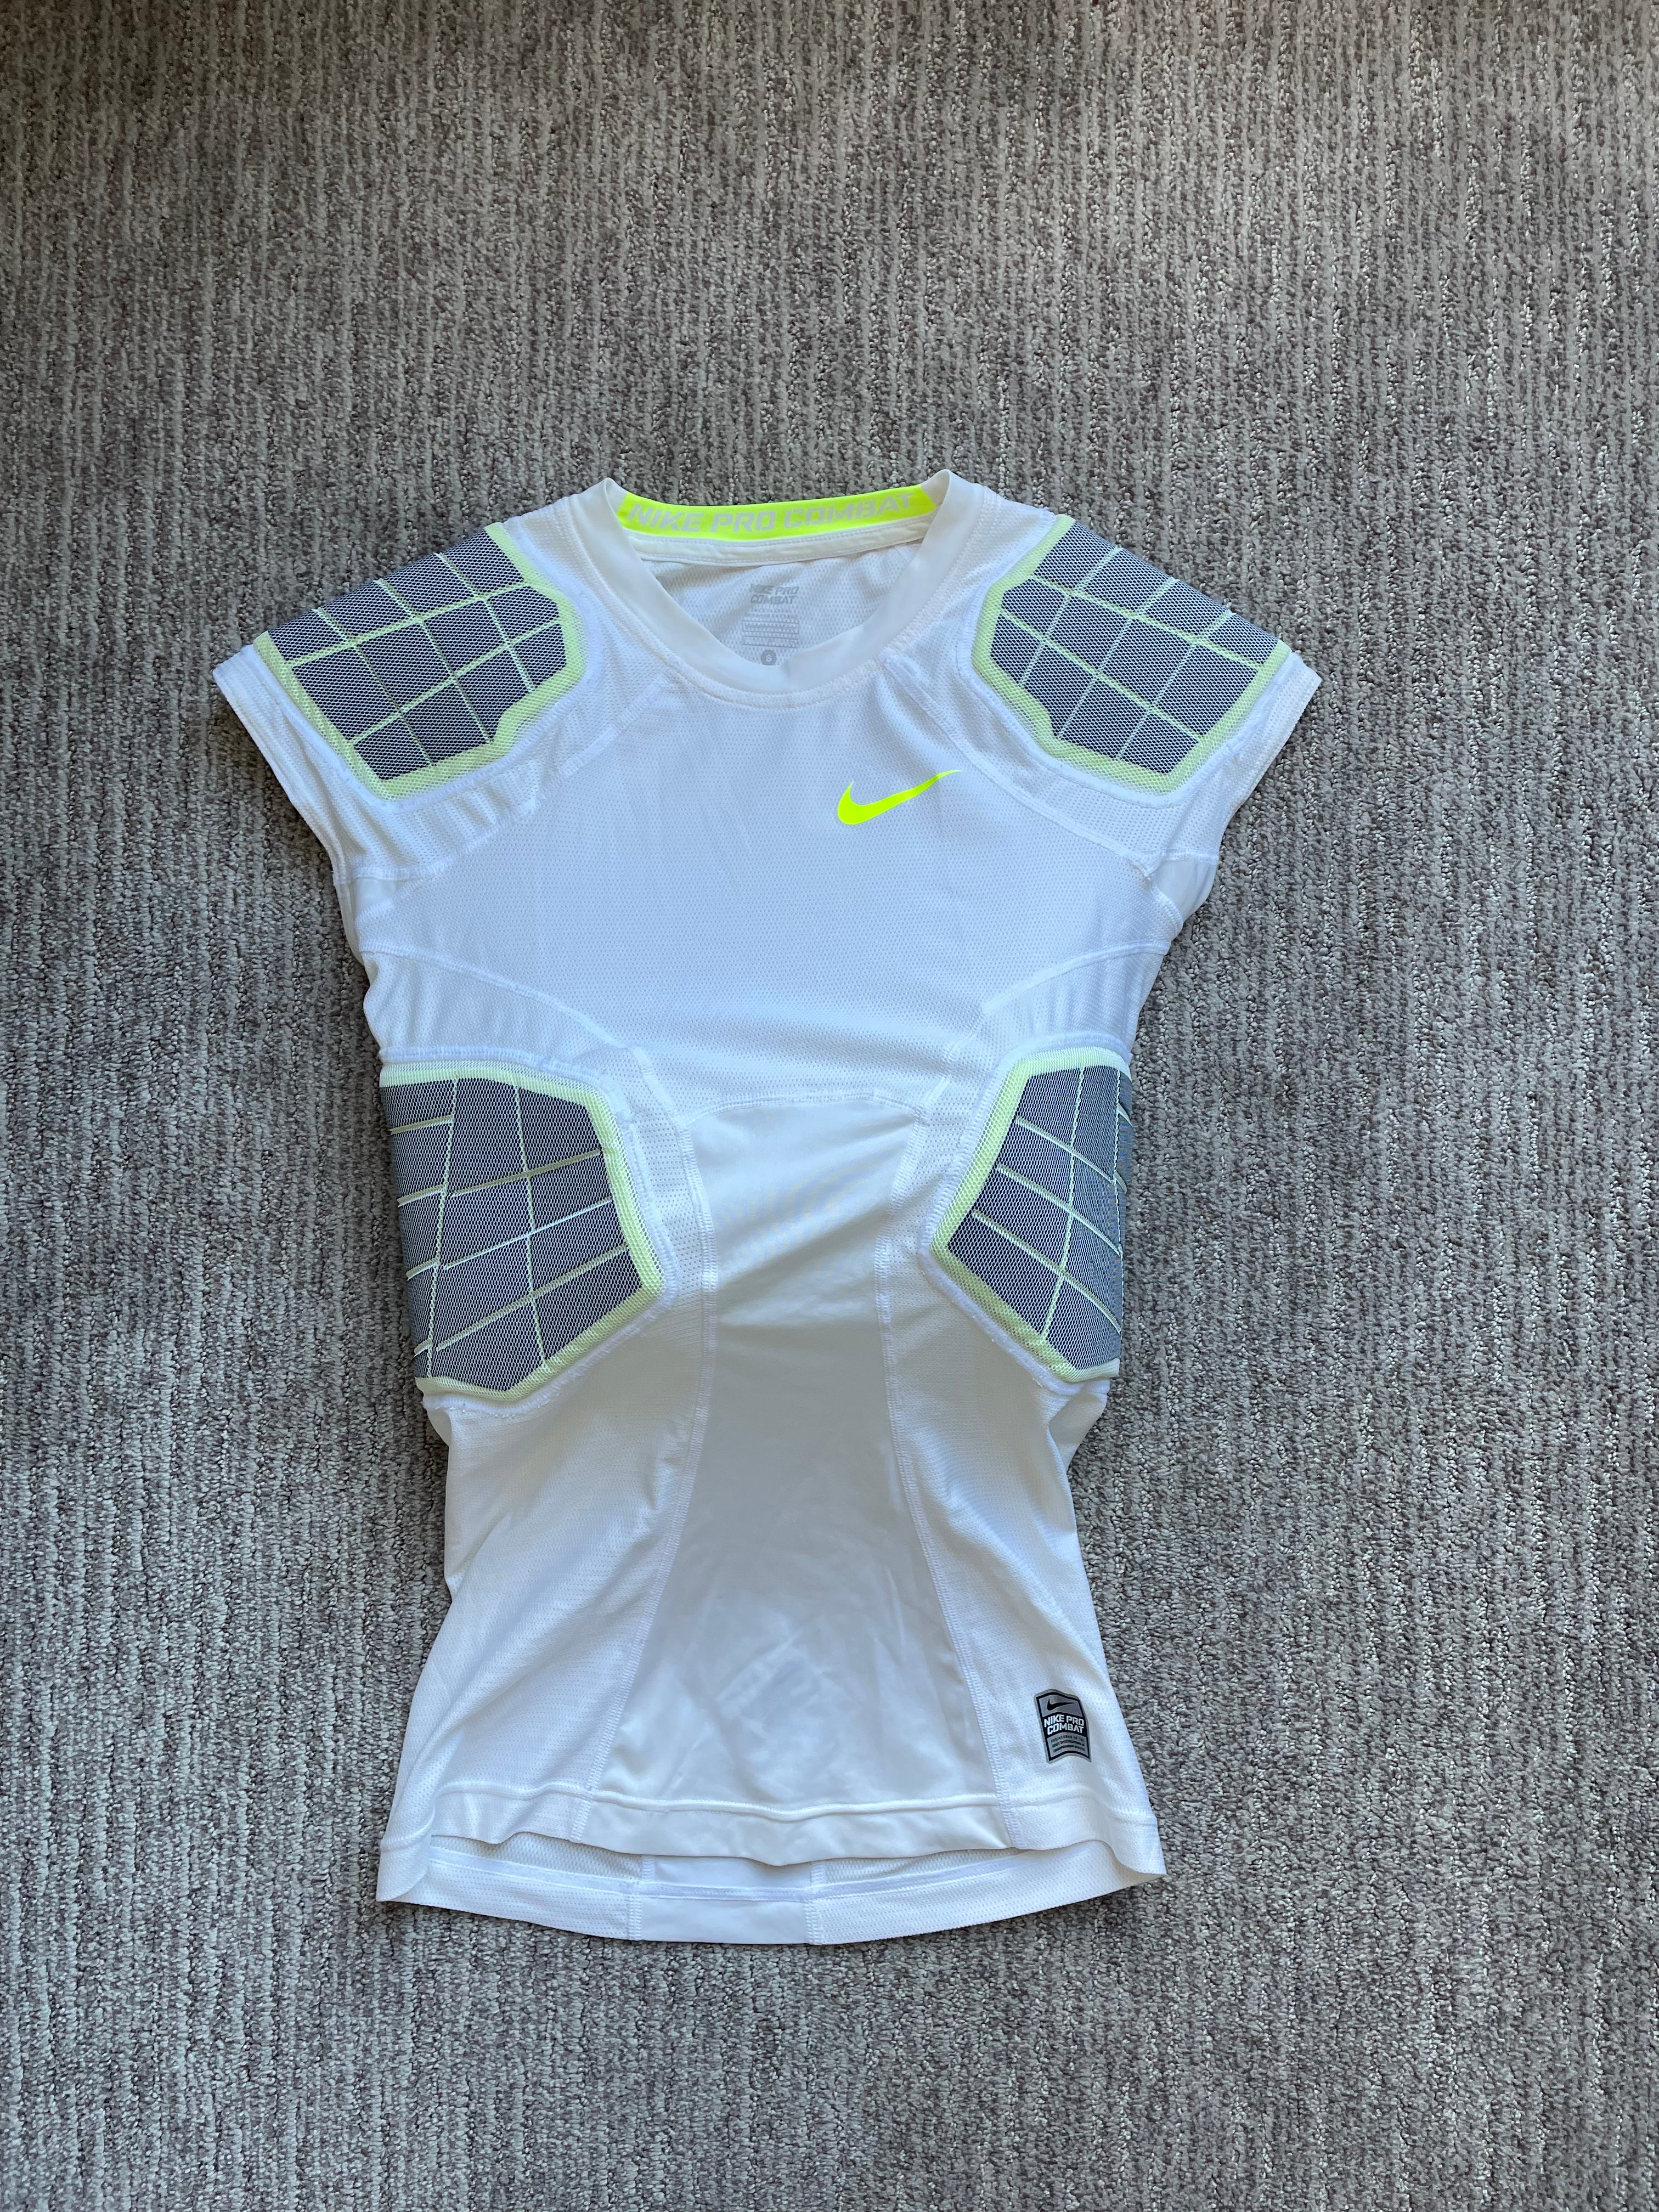 Brand New Nike Pro Combat Compression Padded football shirt